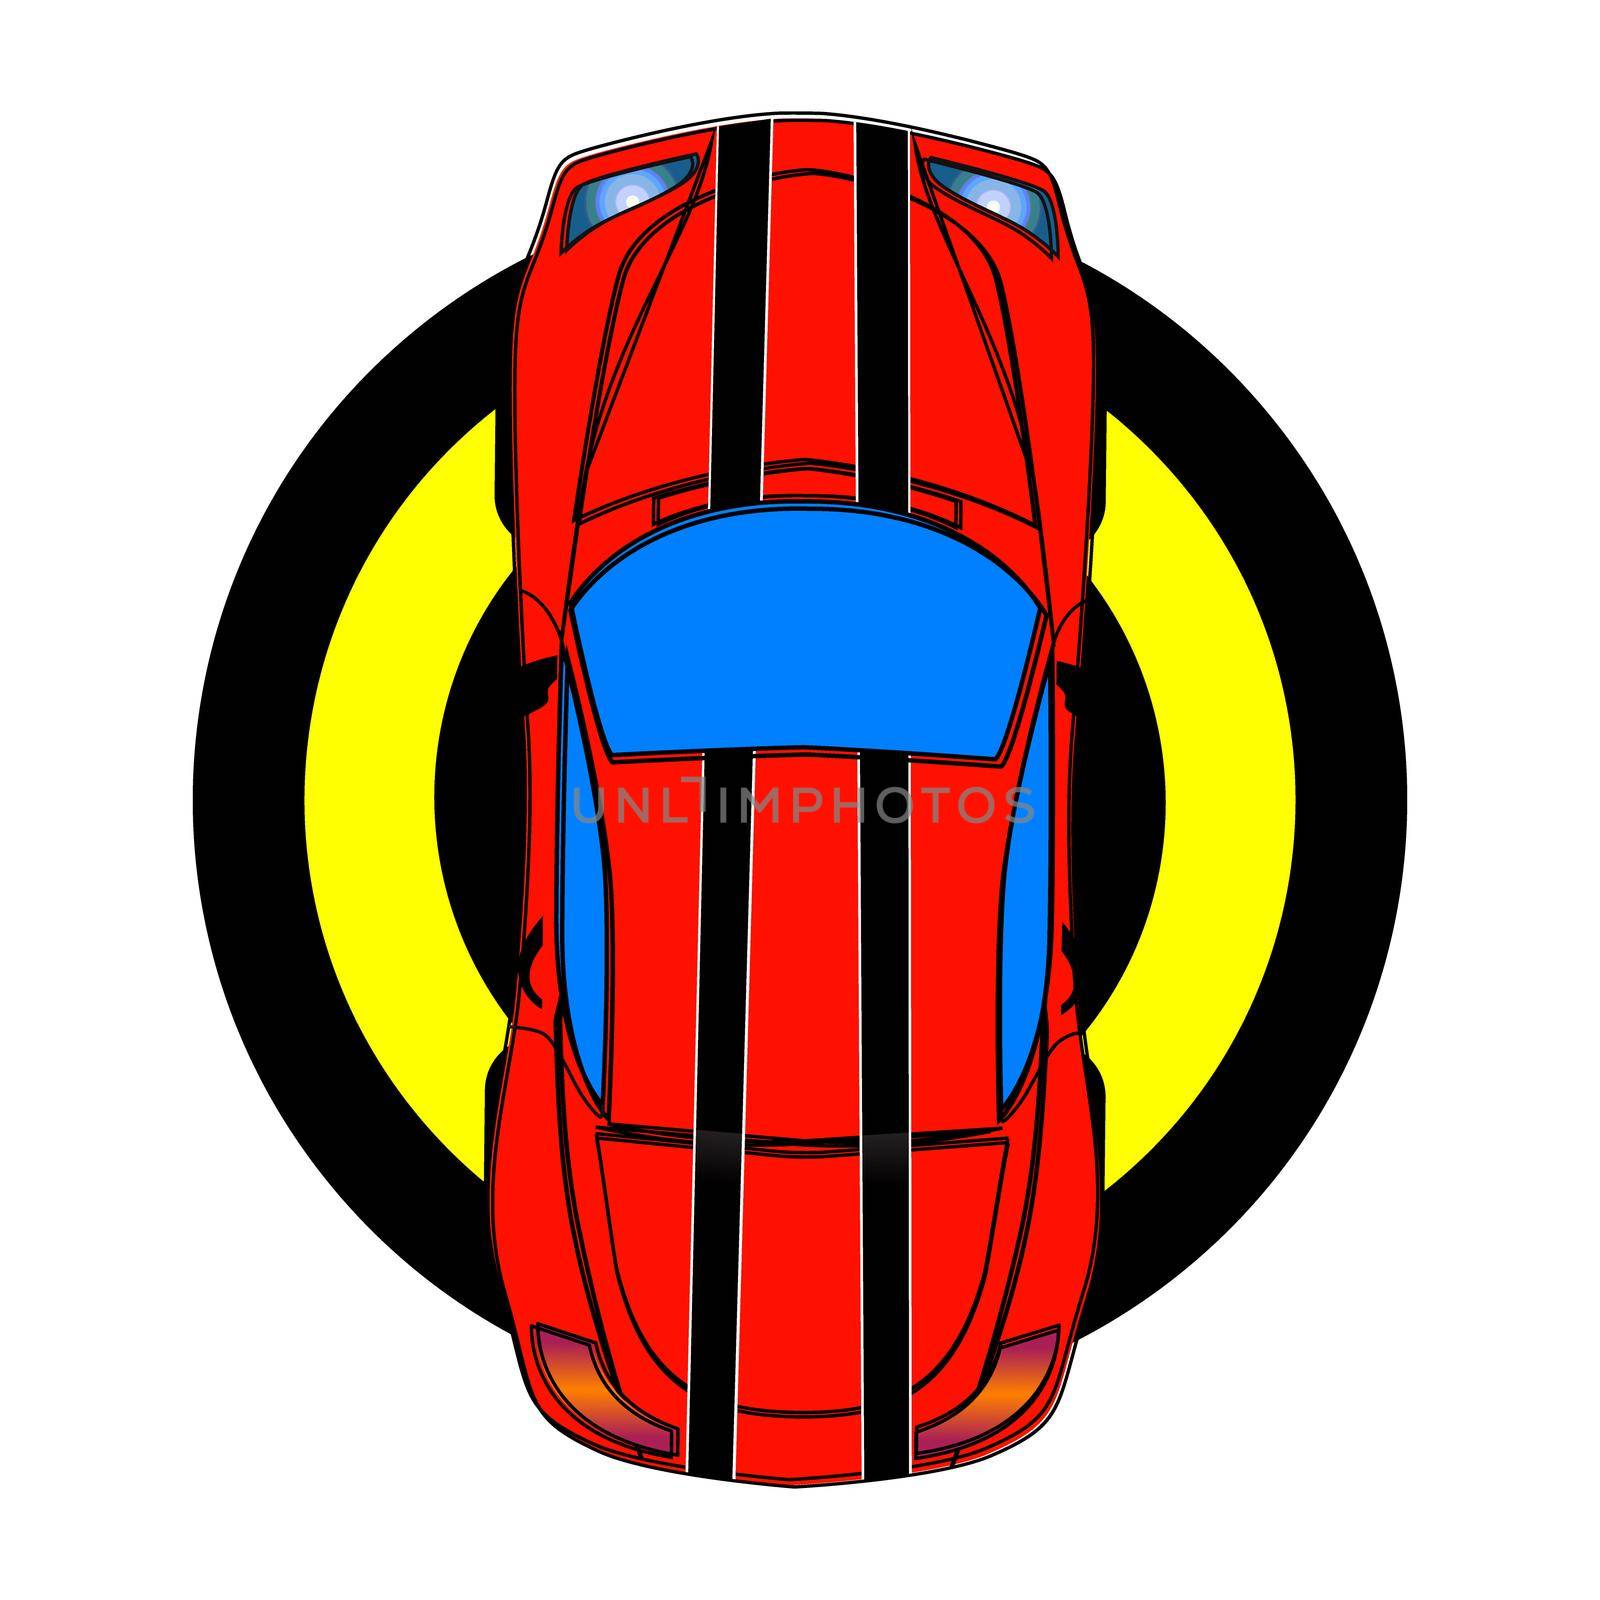 Red sport car by Bobnevv